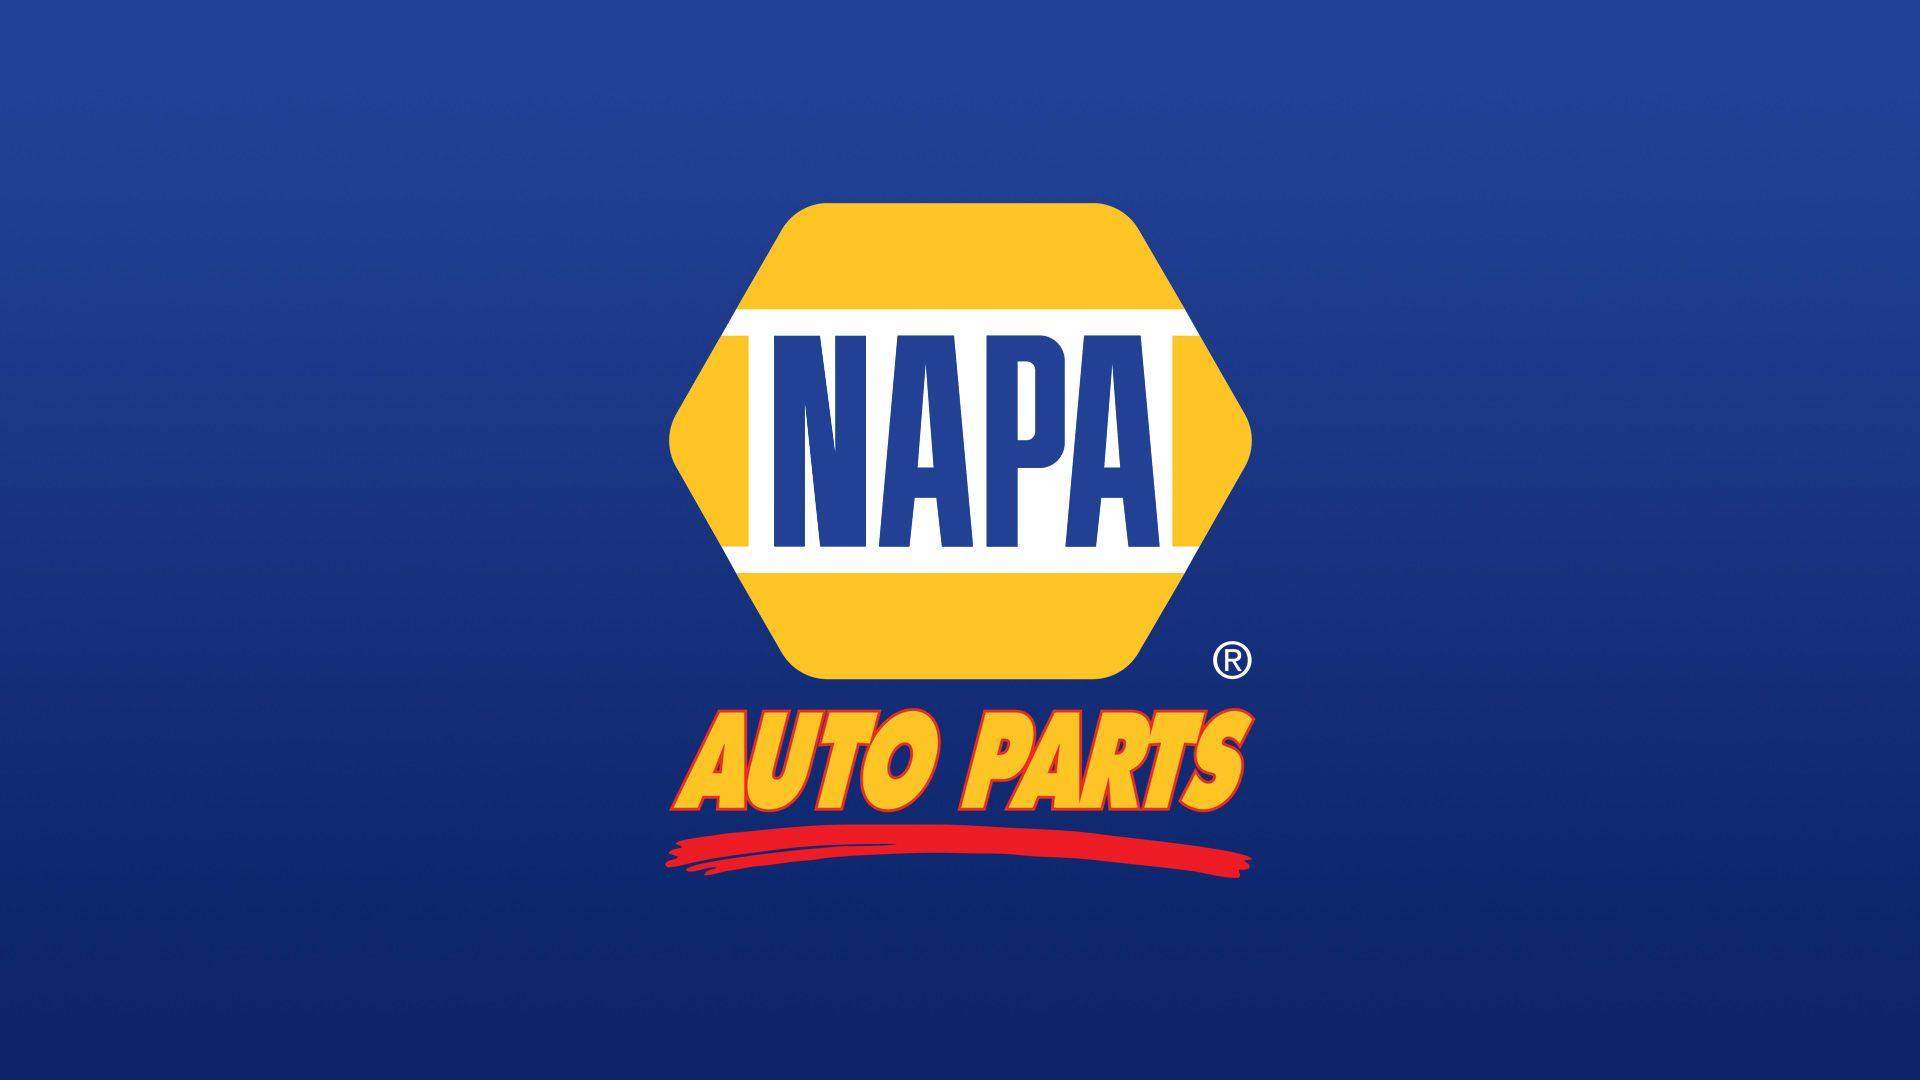 Napa Auto Parts Wallpaper Free Napa Auto Parts Background